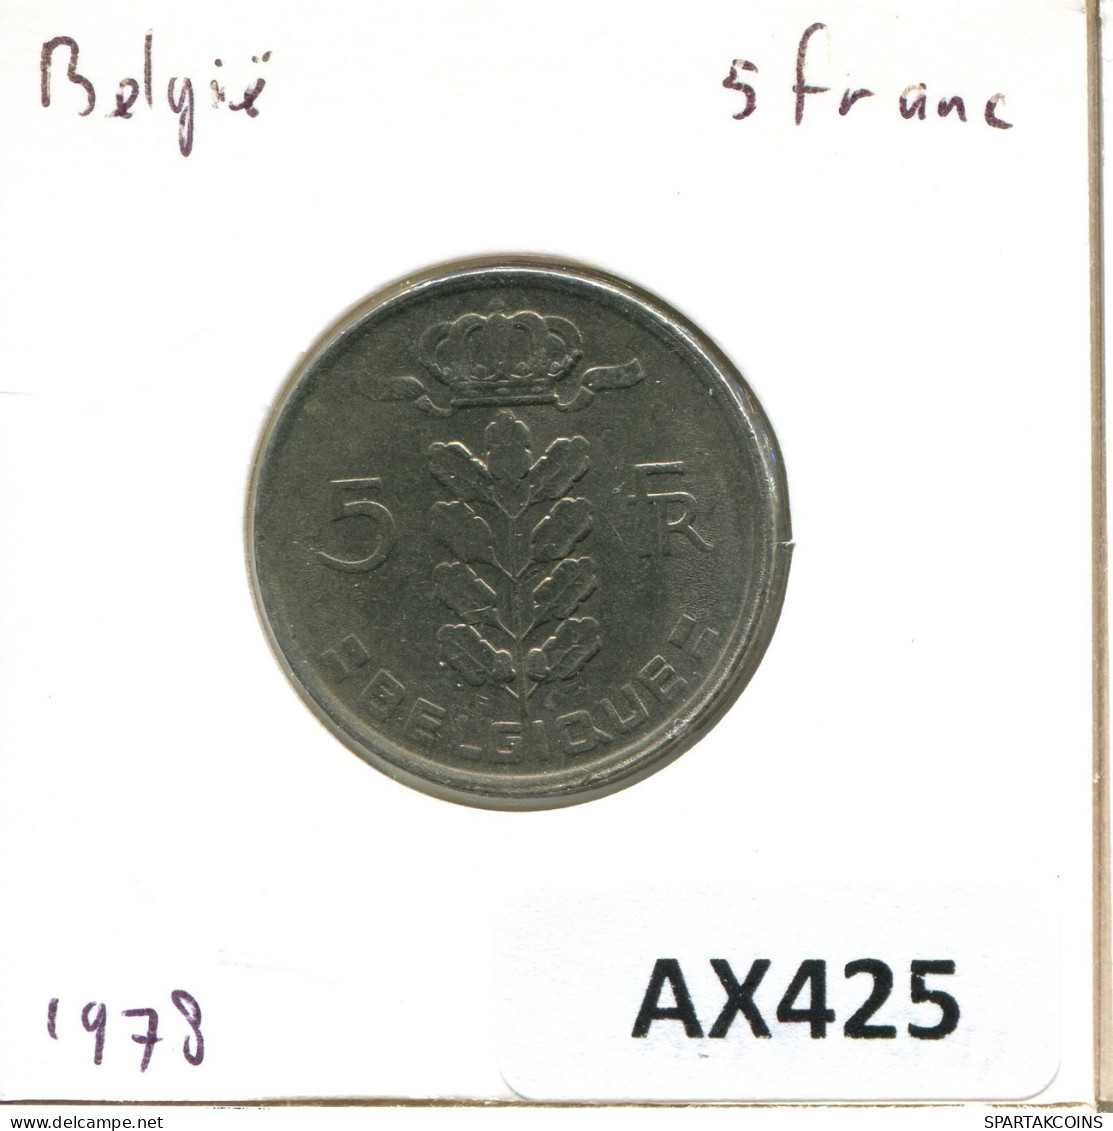 5 FRANCS 1978 BELGIUM Coin FRENCH Text #AX425.U.A - 5 Frank